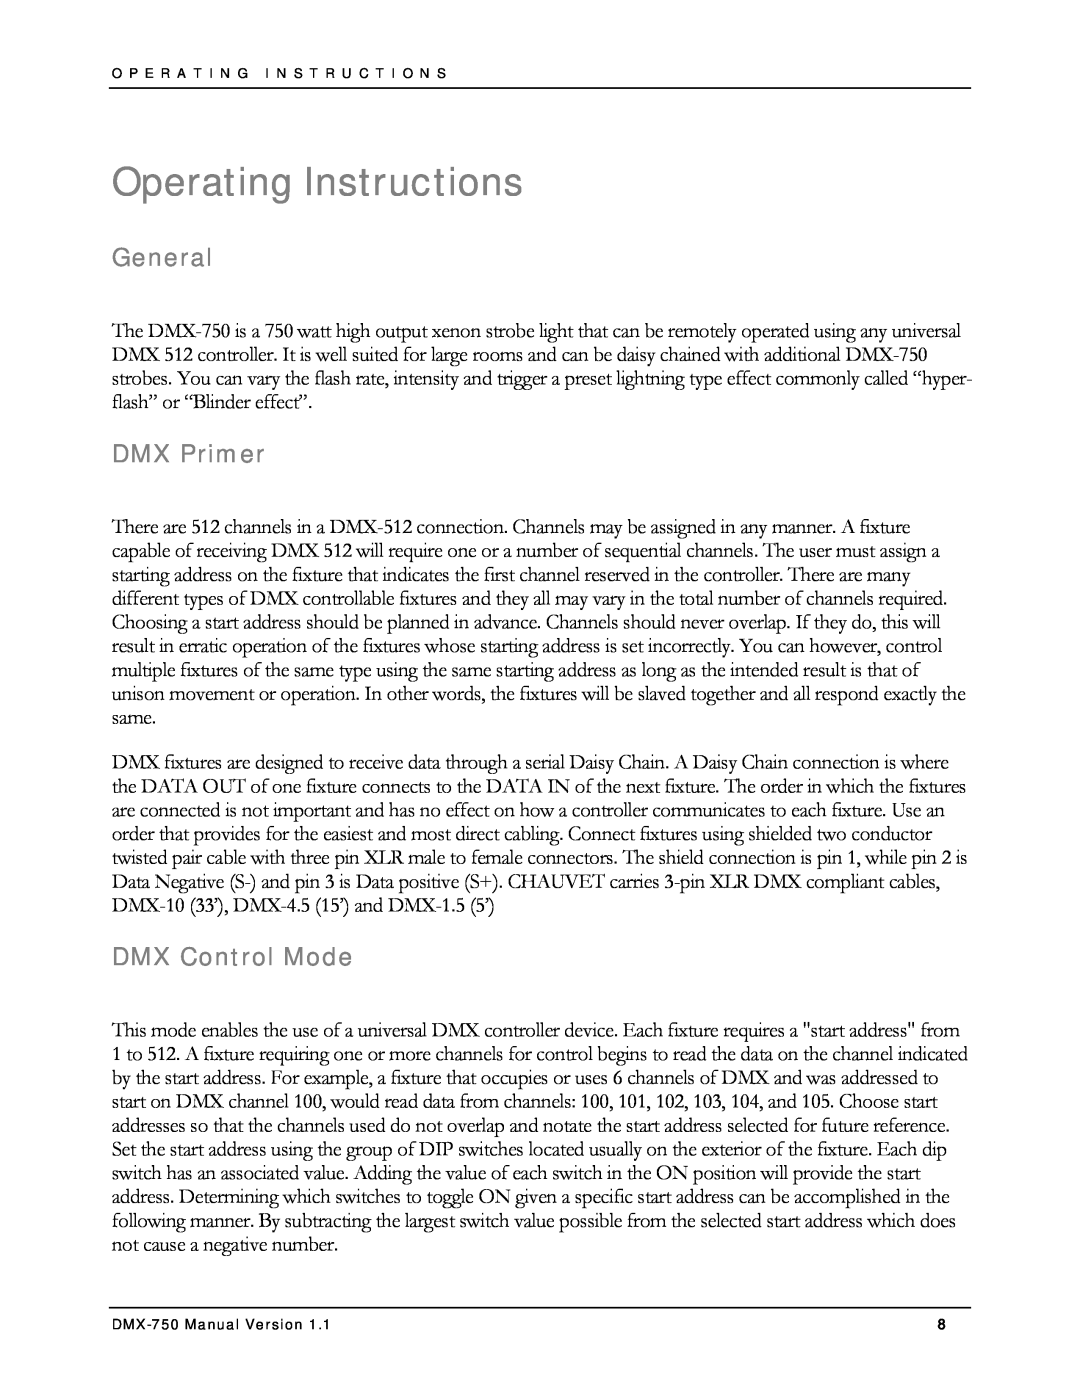 Chauvet DMX-750 manual Operating Instructions, General, DMX Primer, DMX Control Mode 